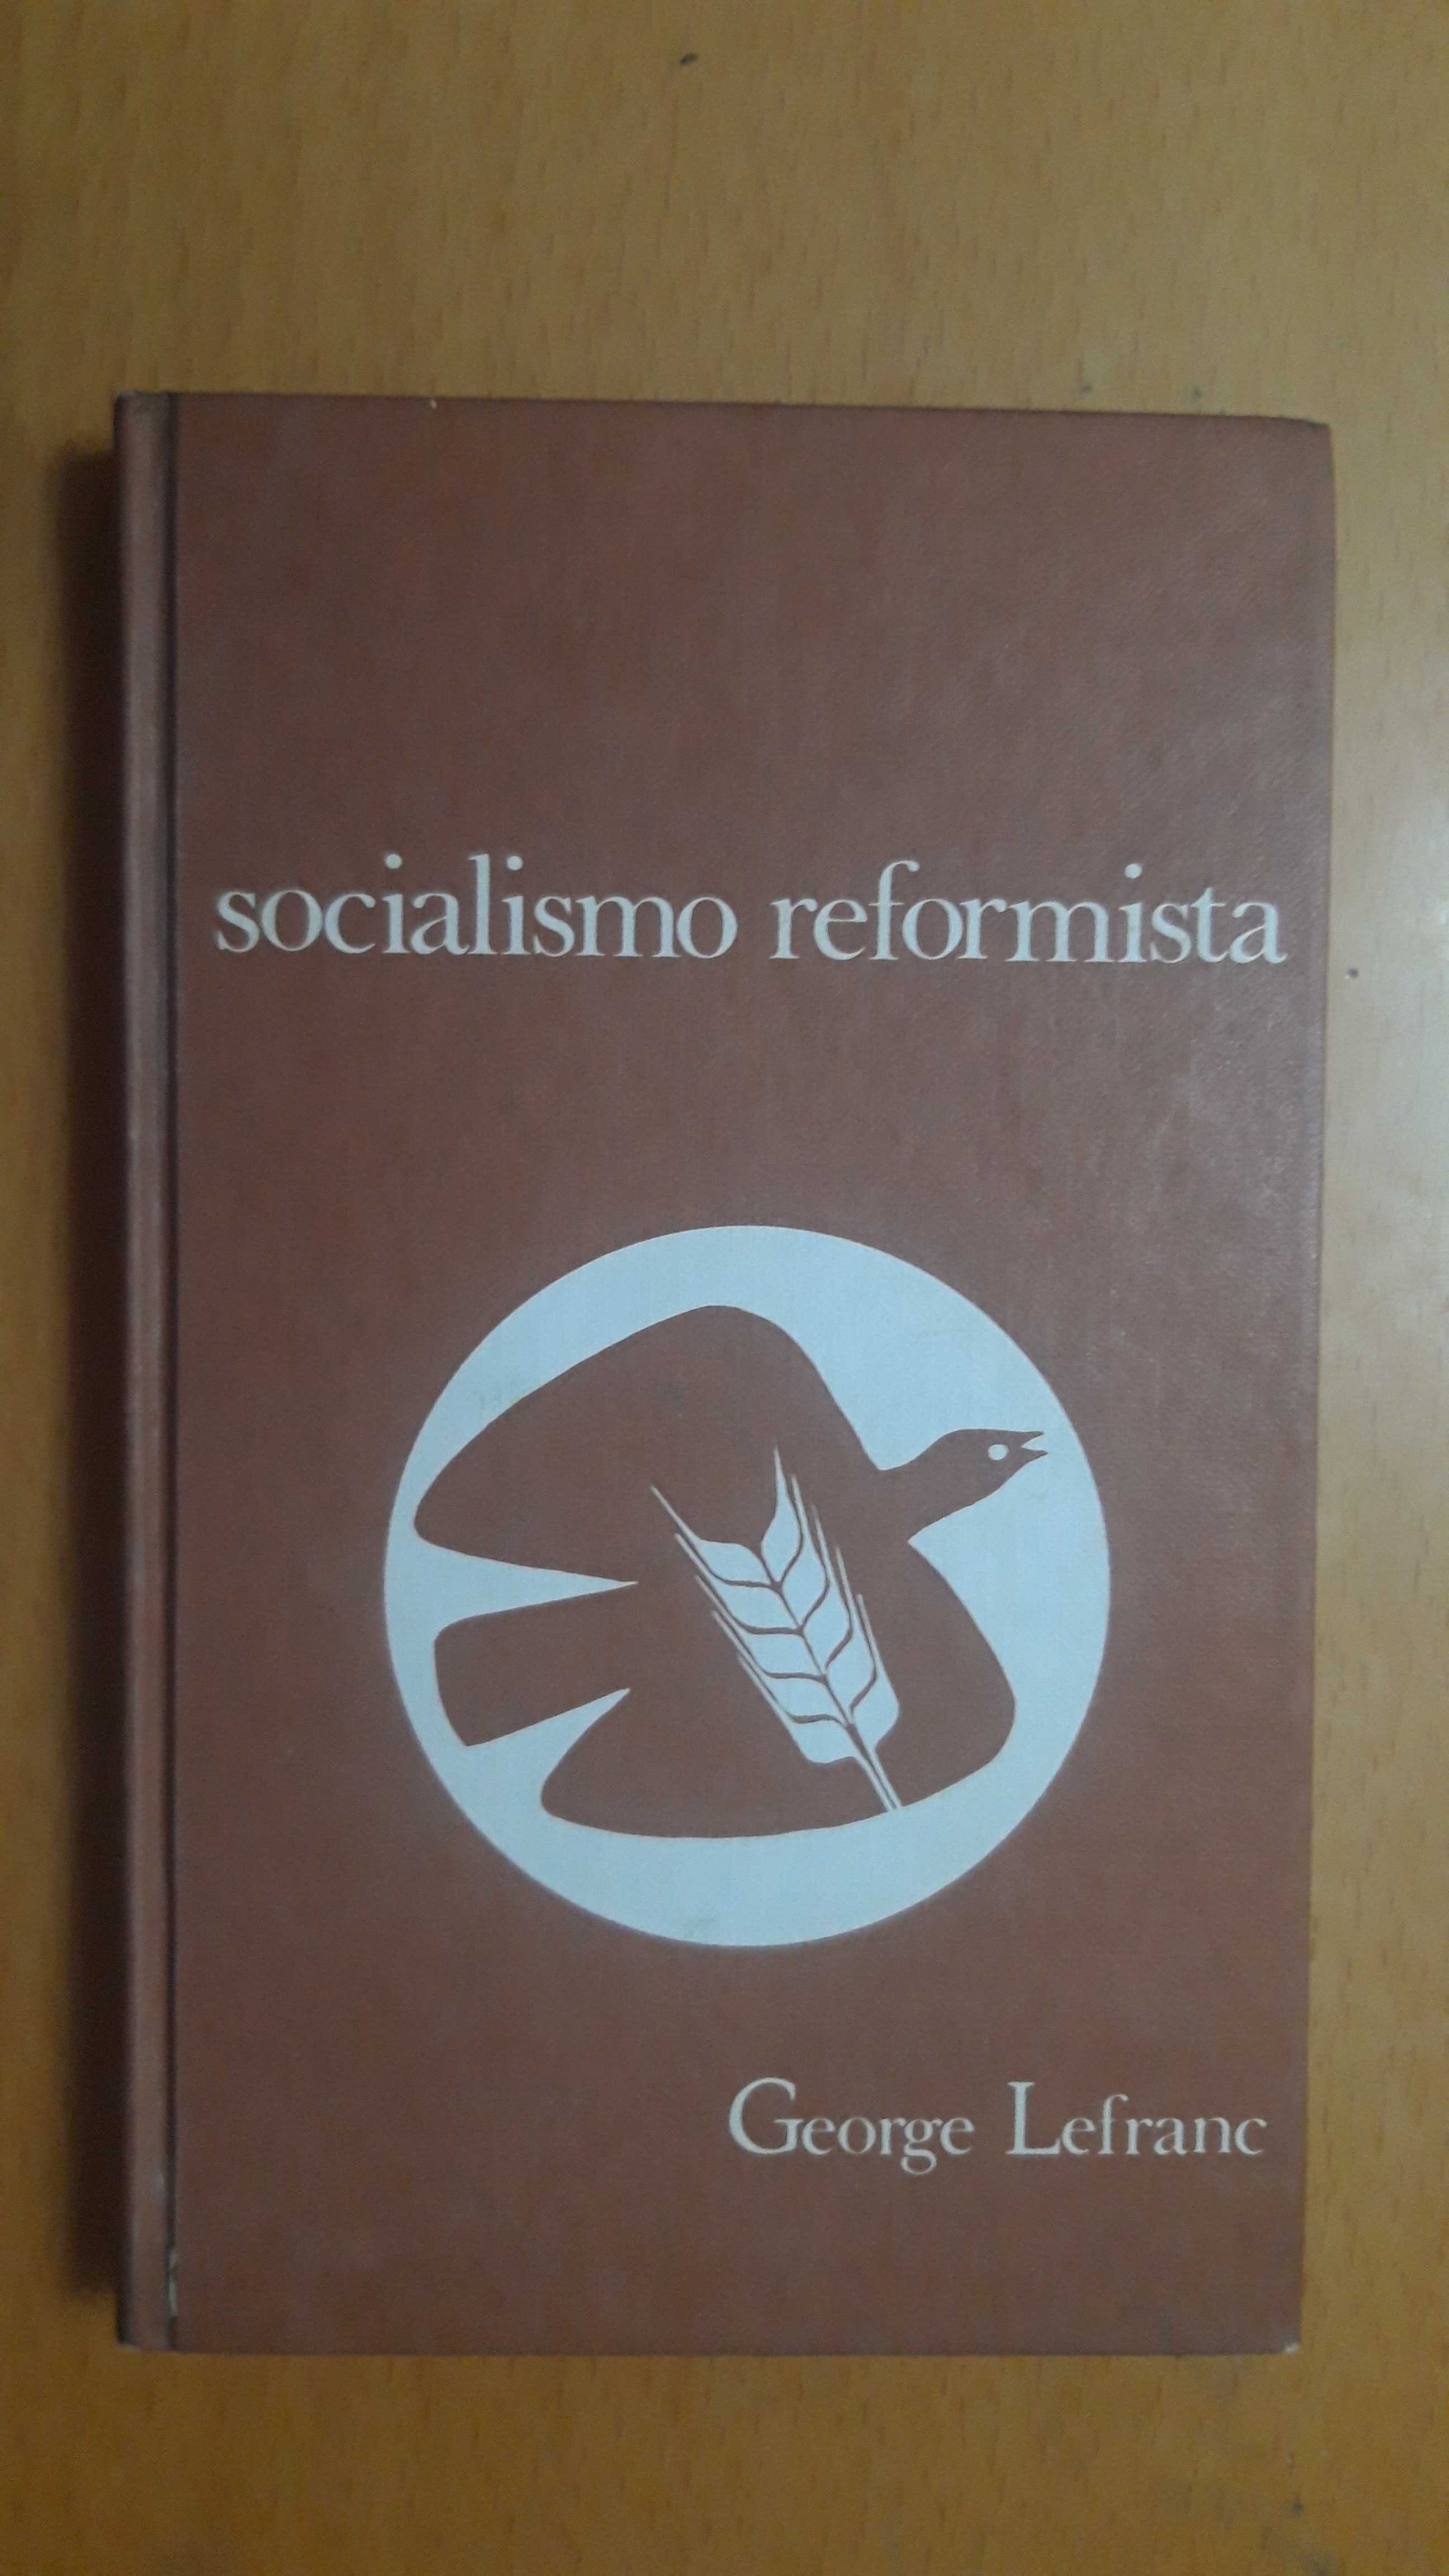 Livro socialismo reformista - George Lefranc